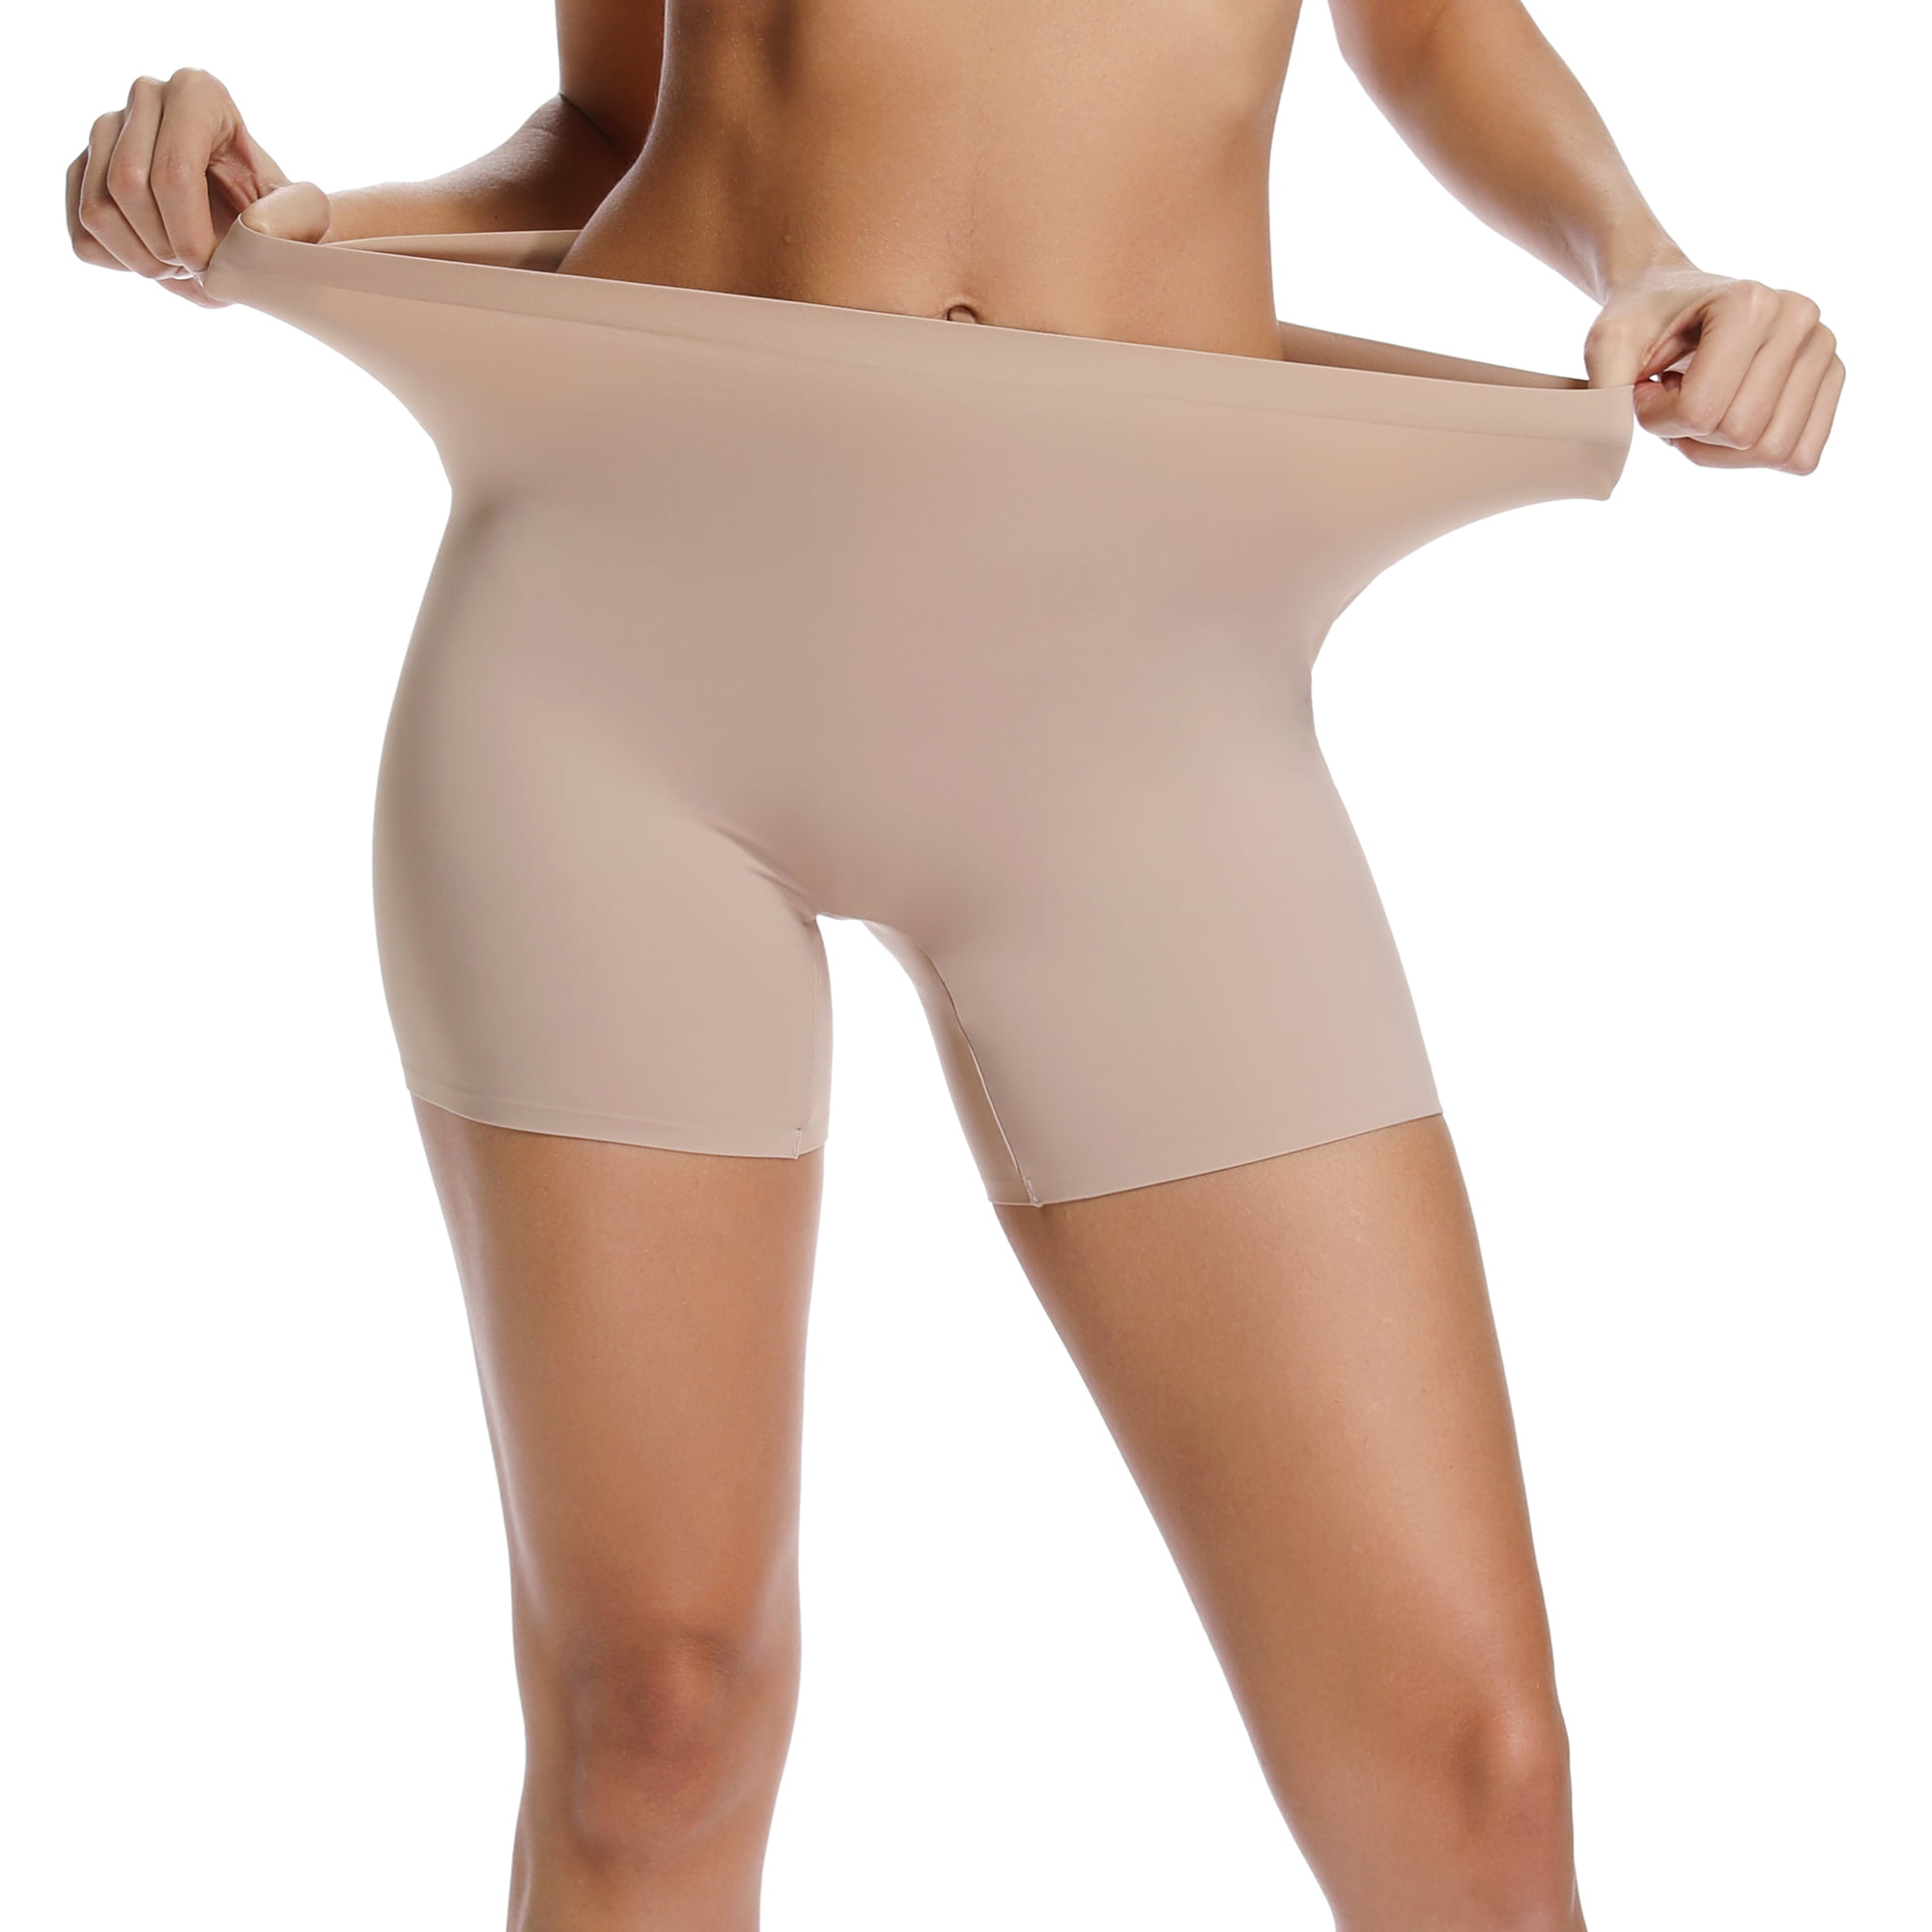 JOYSHAPER Slip Shorts for Under Dresses Women Seamless Boyshort Panties Anti Chafing Thigh Bands Underwear